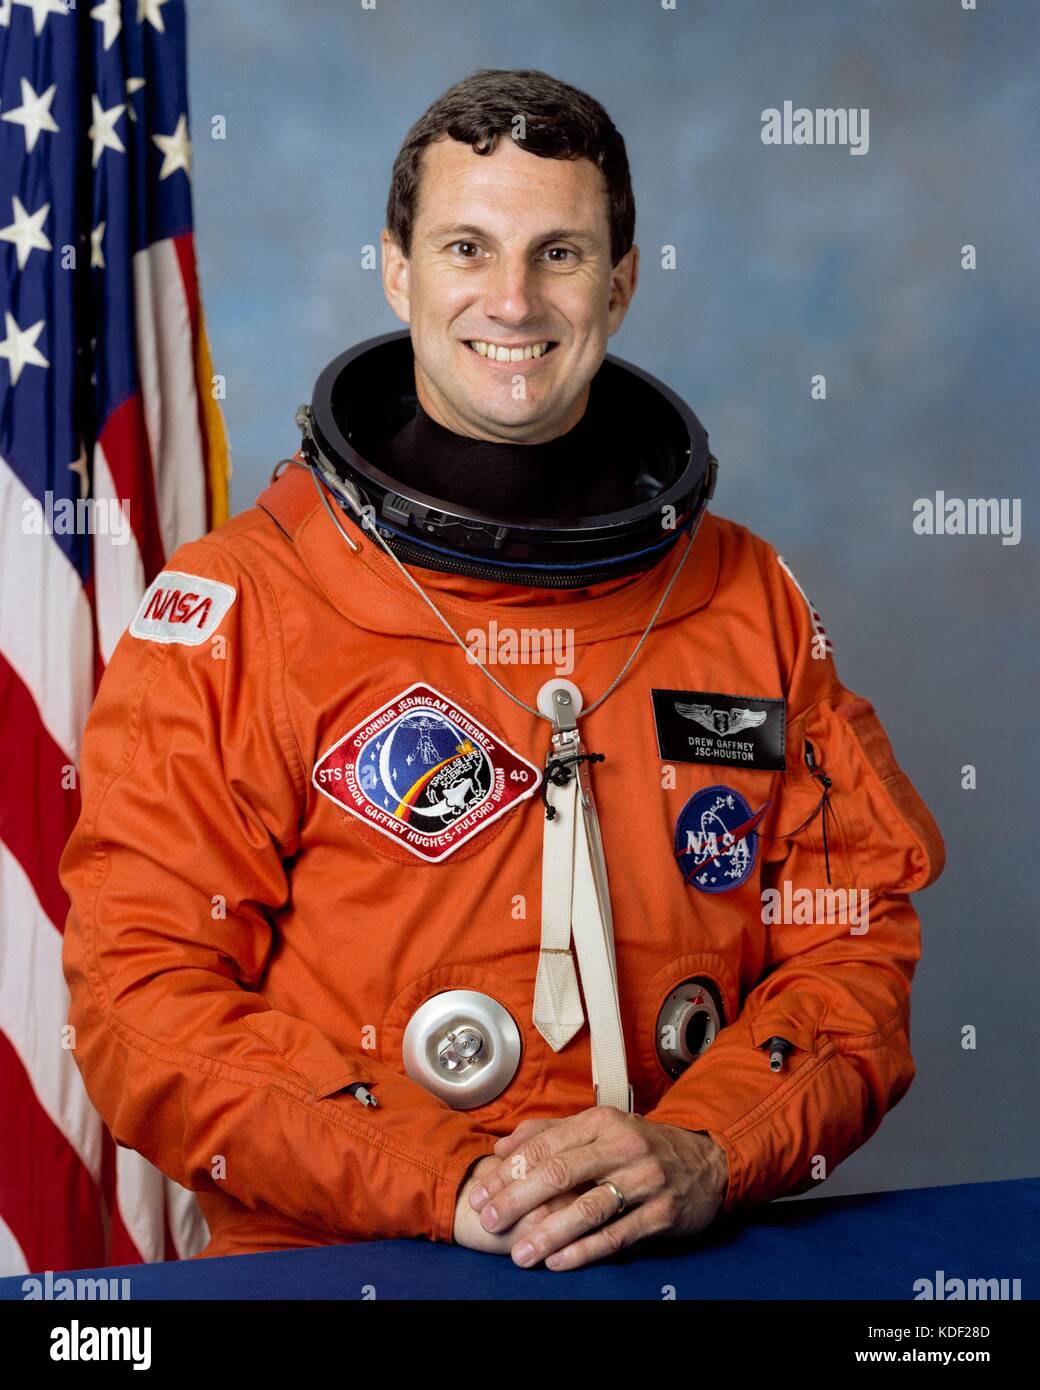 Offizielles Portrait der NASA Mission STS-40 Spacelab Life sciences Mission crew Astronaut Dr. Francis 'dRew' Gaffney in einem orange Spacesuit am Johnson Space Center Juli 6, 1990 in Houston, Texas. (Foto: Nasa Foto über planetpix) Stockfoto